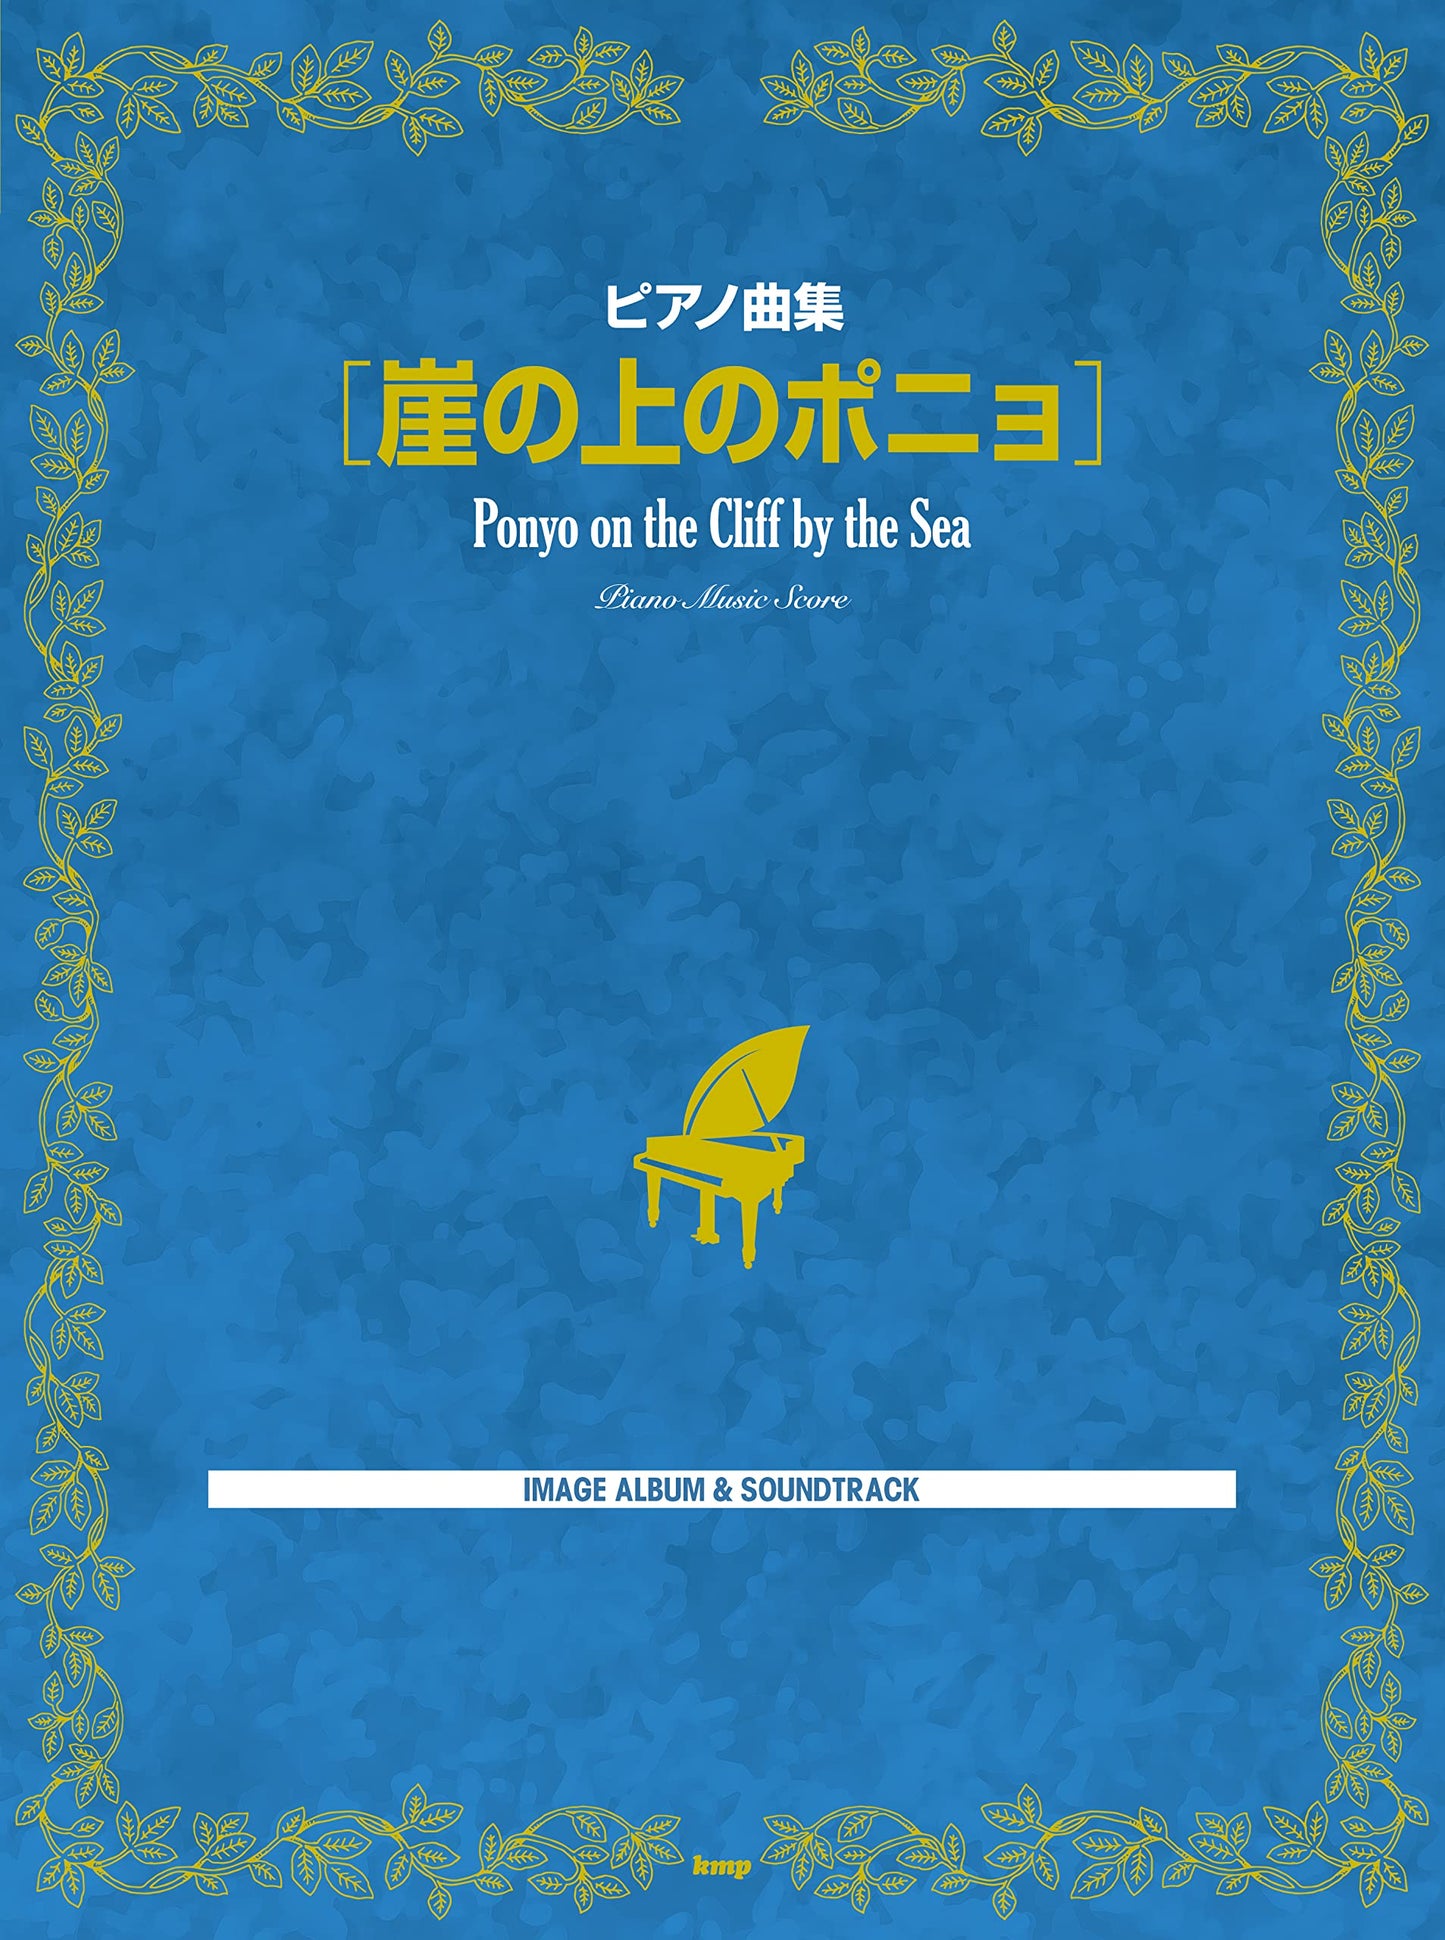 Ponyo on a Cliff by the Sea: Studio Ghibli Piano Music Score